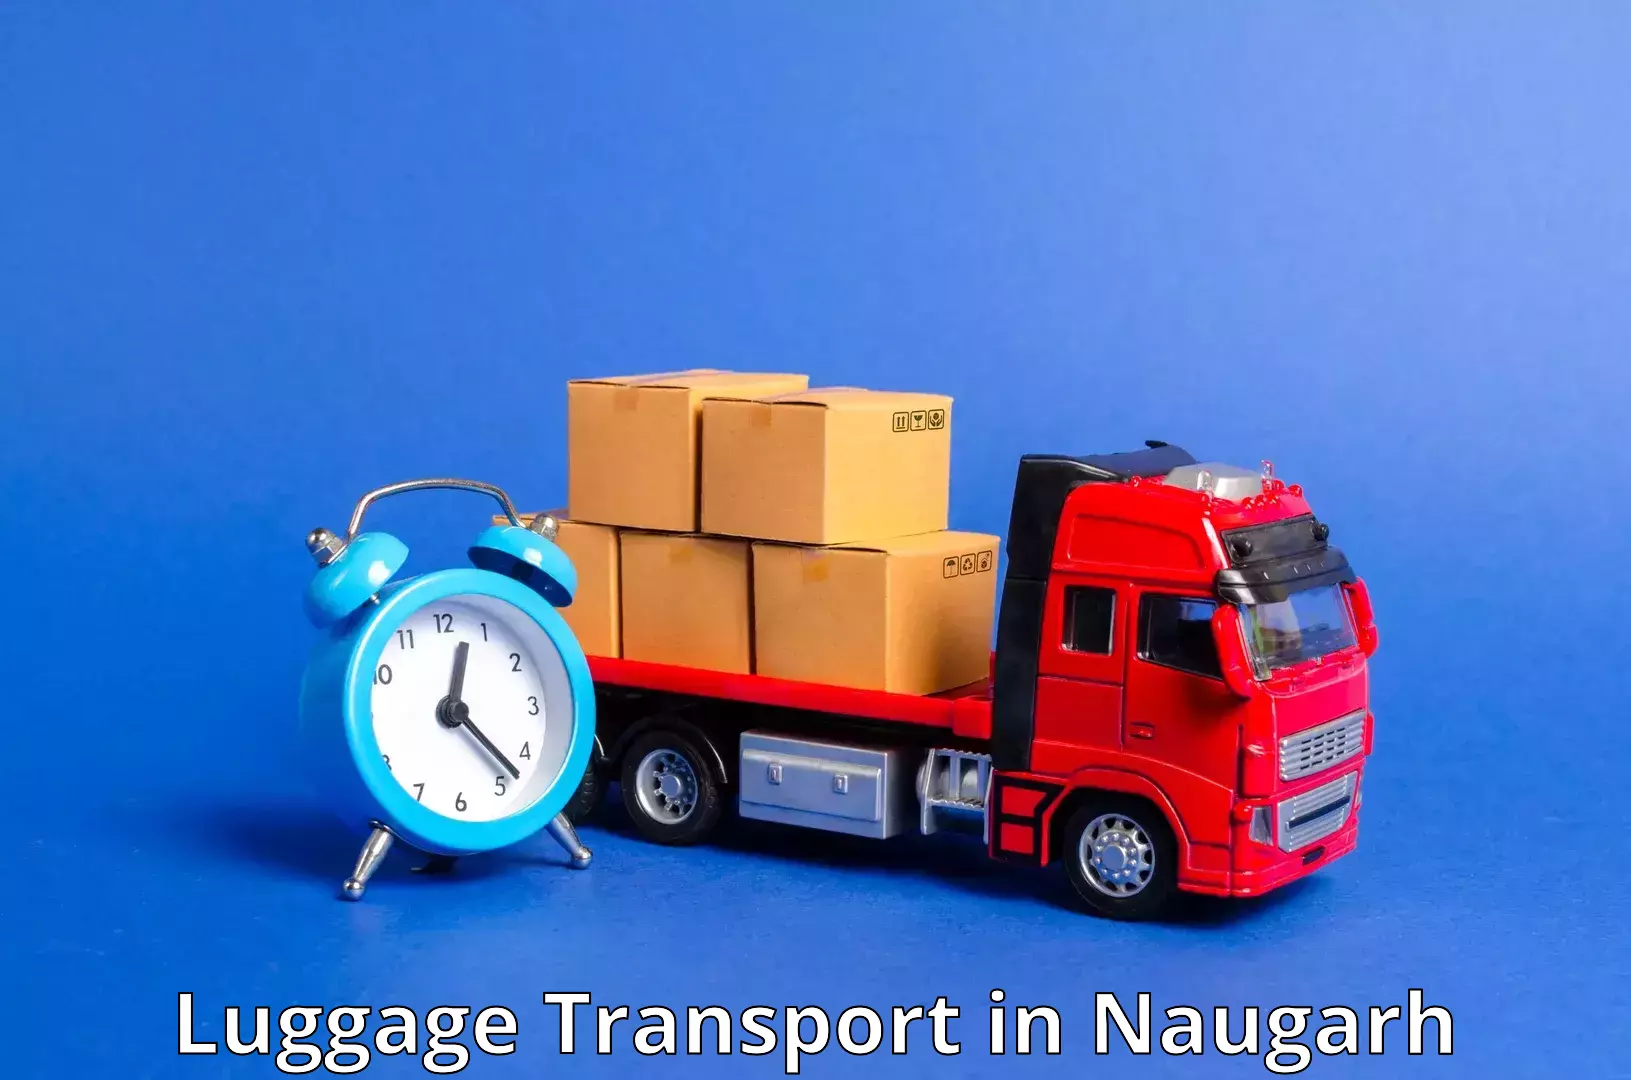 Luggage transport service in Naugarh